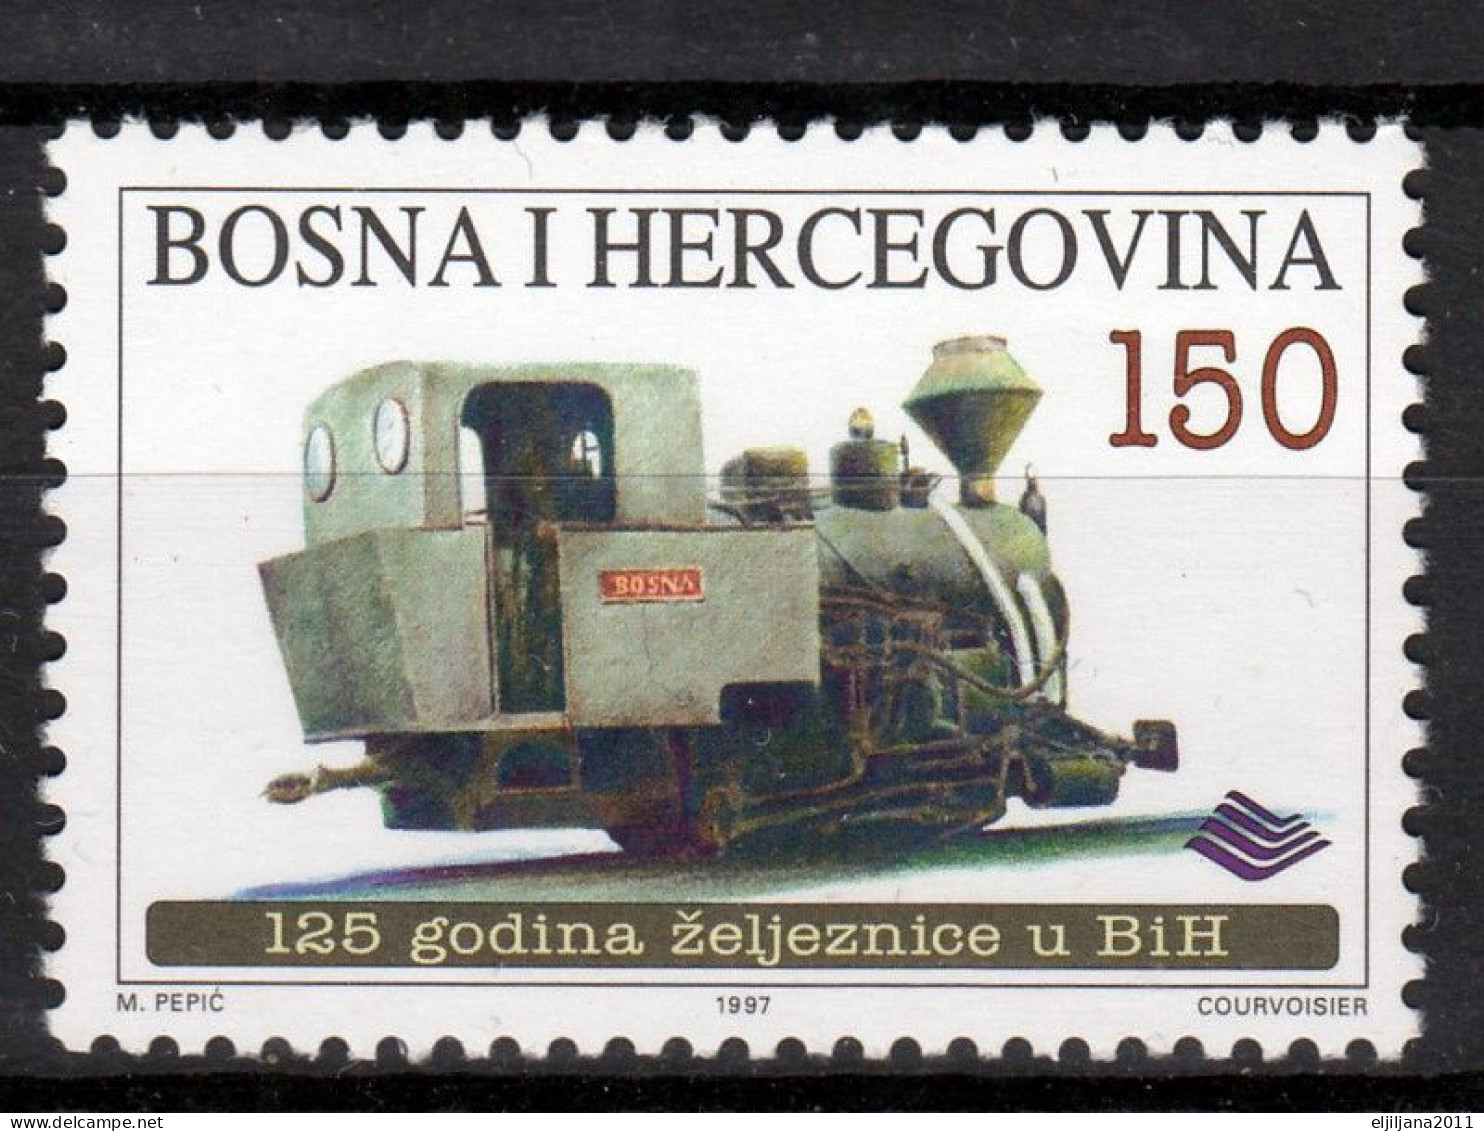 BOSNA I HERCEGOVINA 1997 Bosnia And Hercegovina ⁕ 125 Years Of Railways In BiH Mi. 97 ⁕ 4 + 1v MNH - Bosnia And Herzegovina